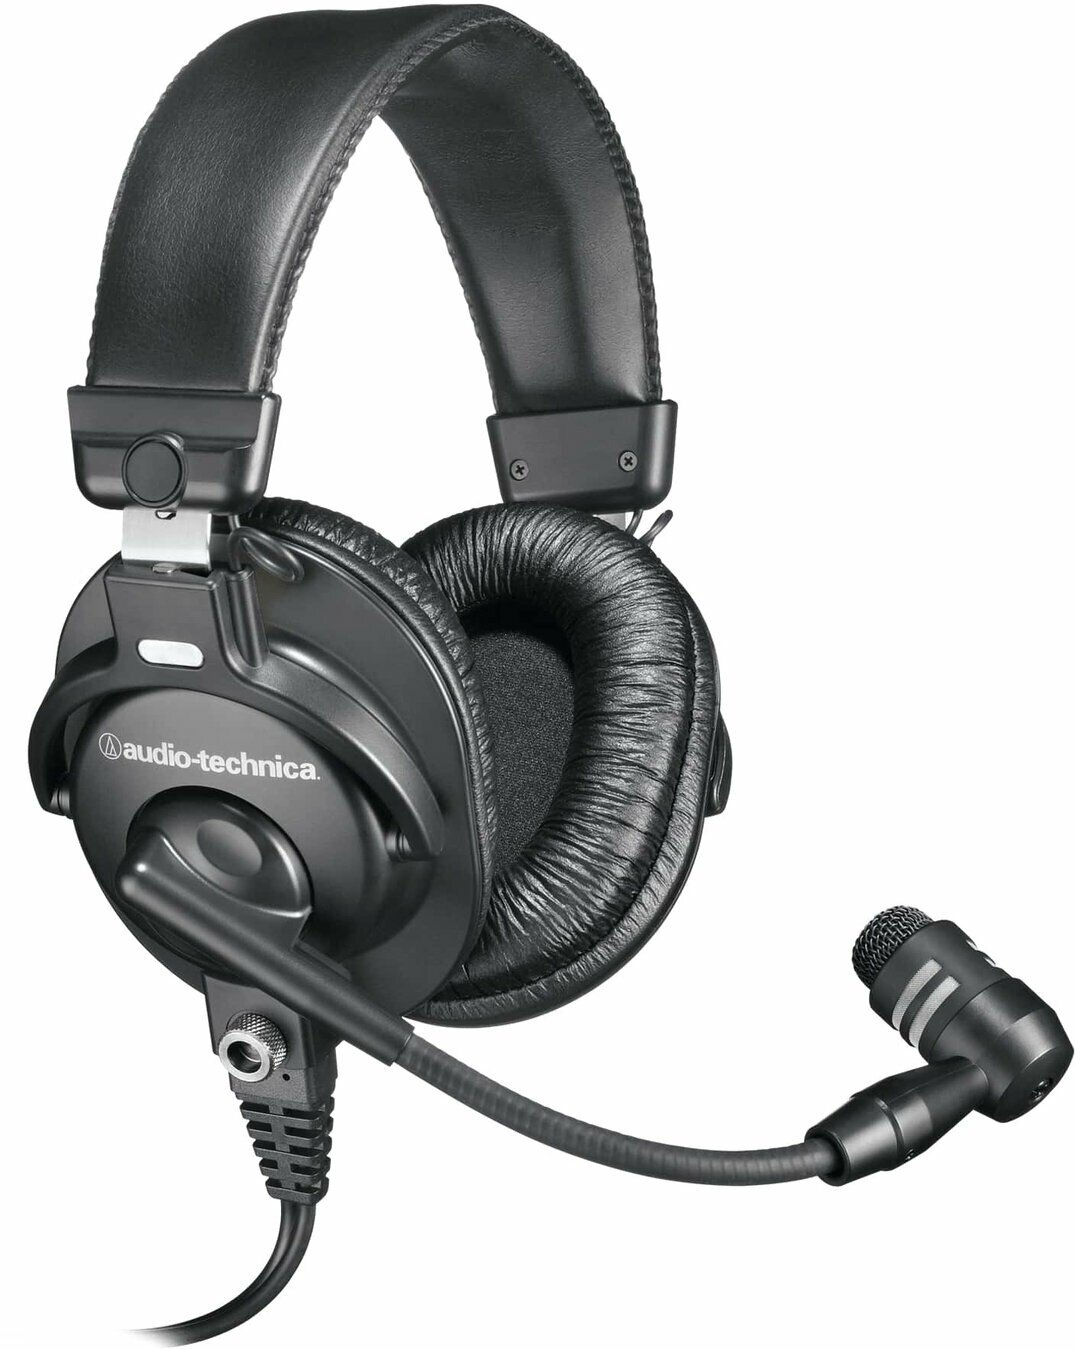 Hör-Sprech-Kombination Audio-Technica BHPS1